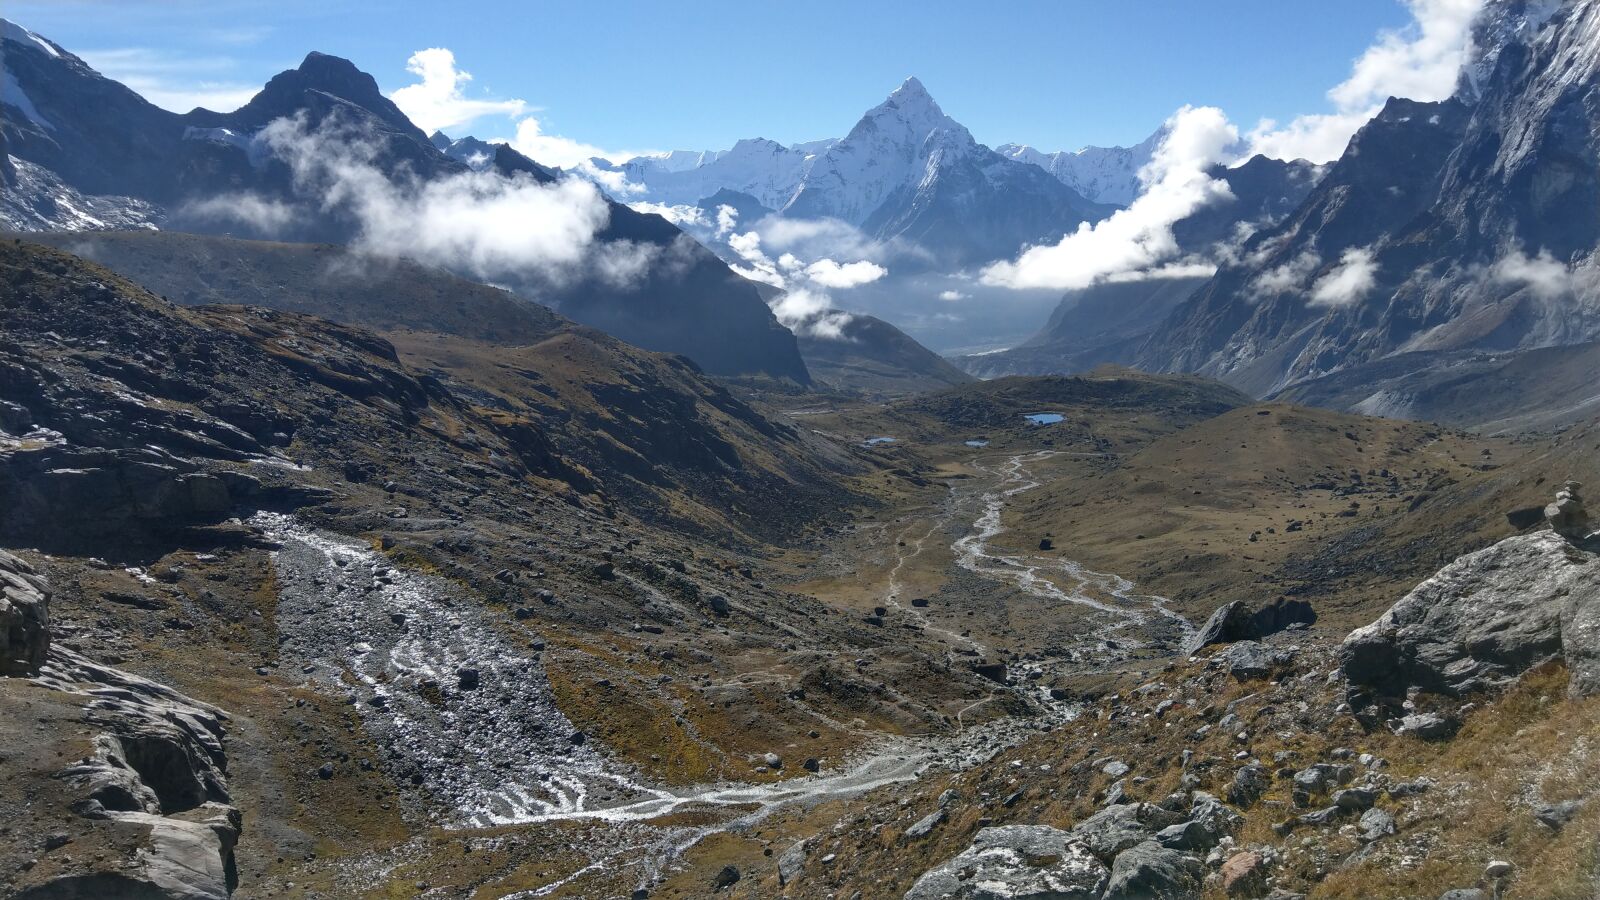 HTC U11 sample photo. Ama dablam, nepal, mountain photography